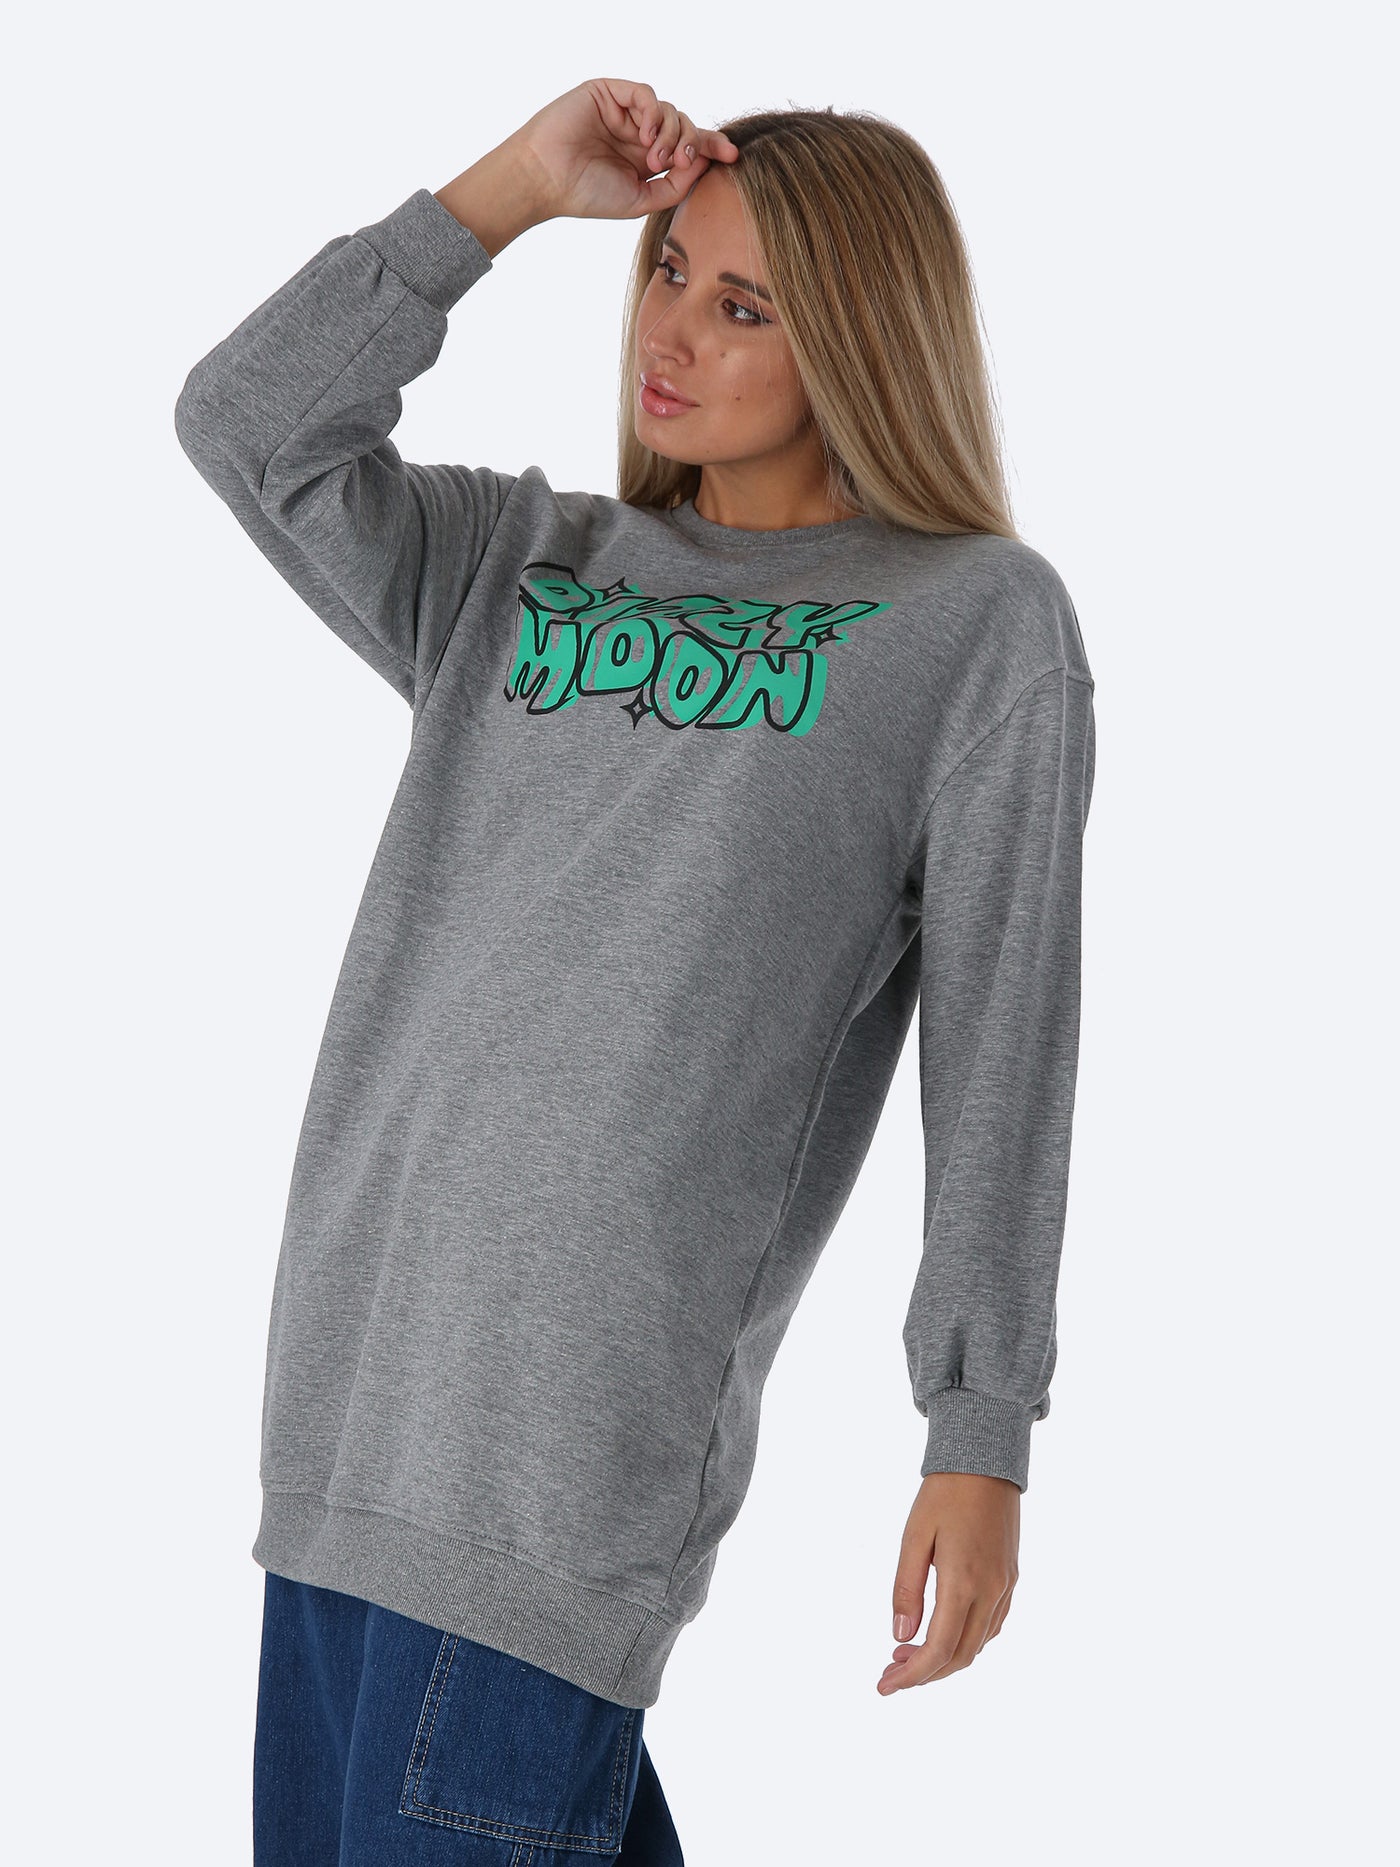 Sweatshirt - "Dizzy Moon" - Round Neck